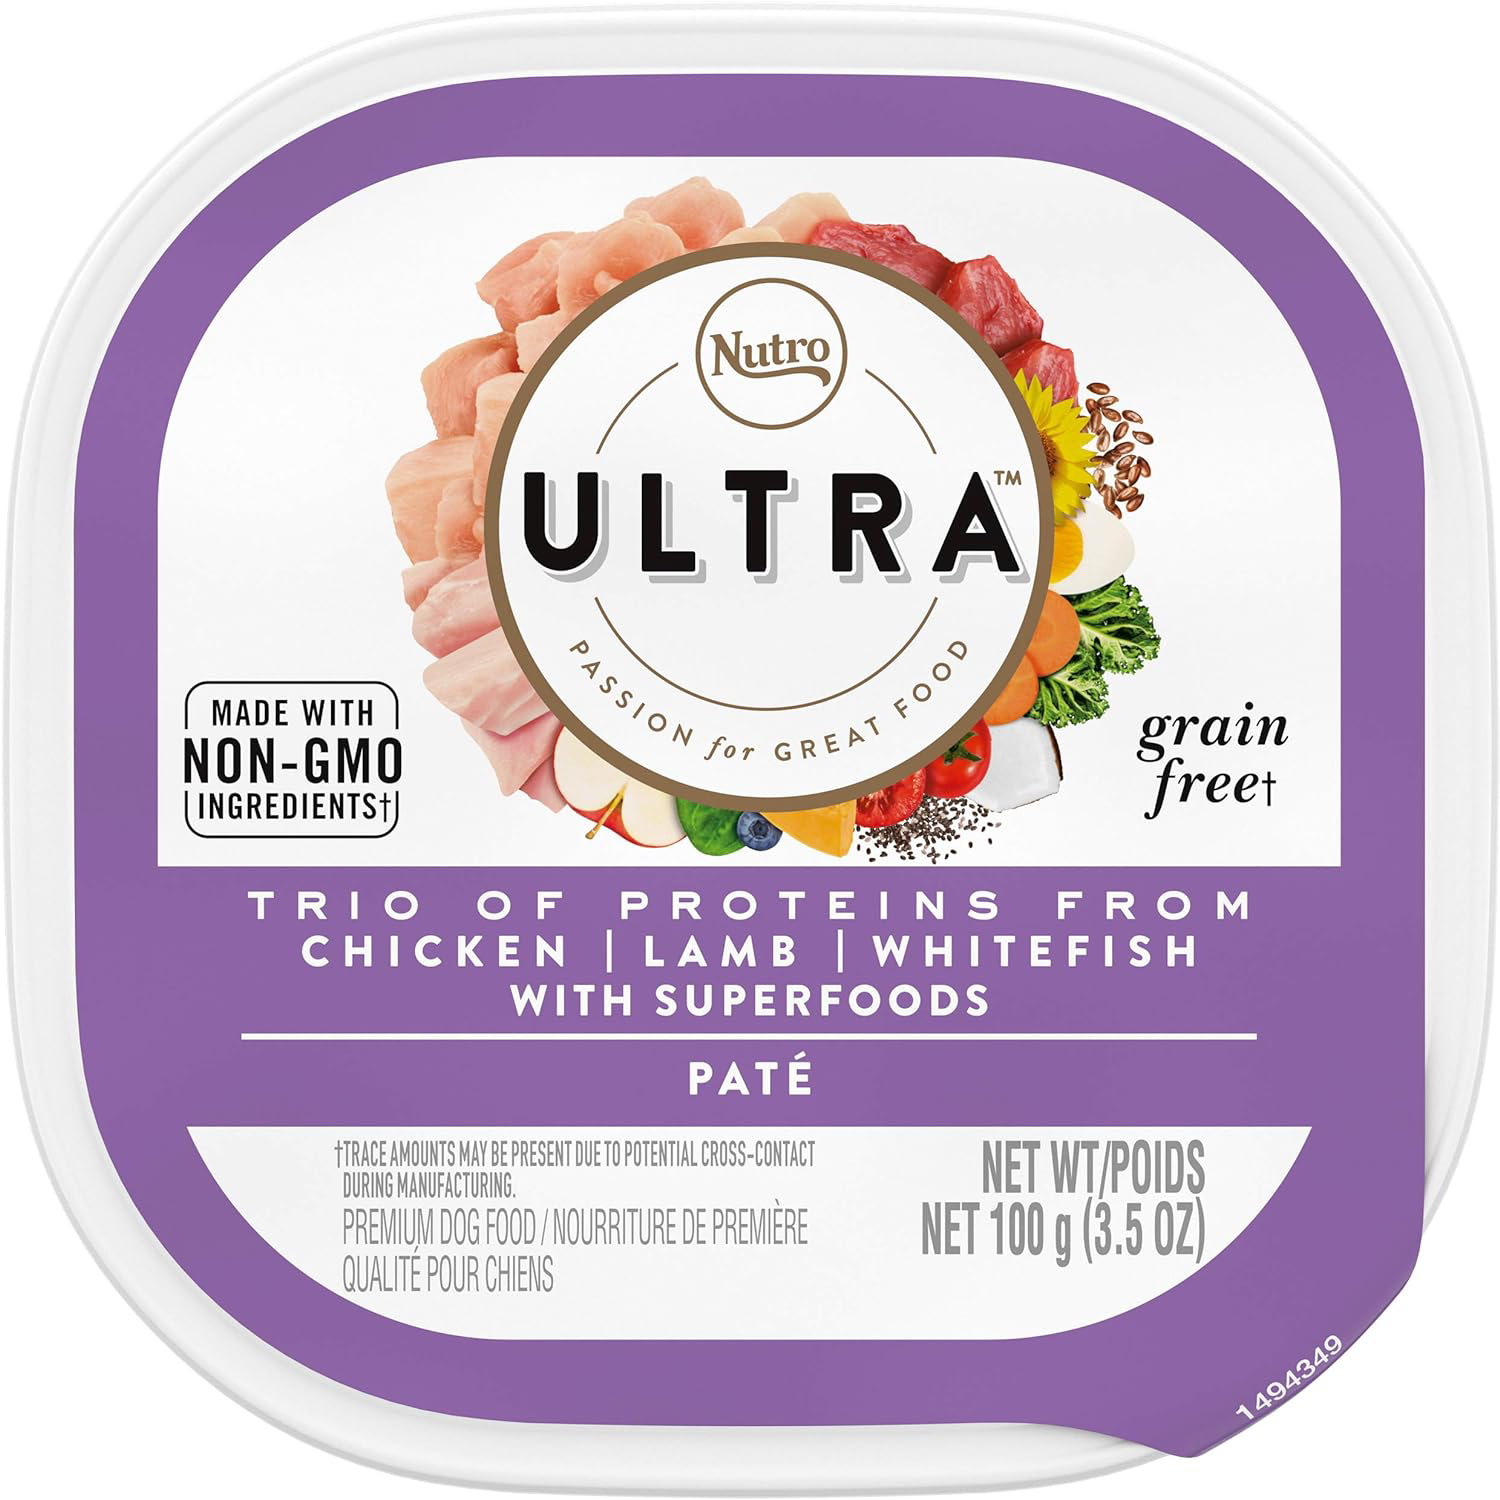 NUTRO ULTRA Adult Grain Free Soft Wet Dog Food 